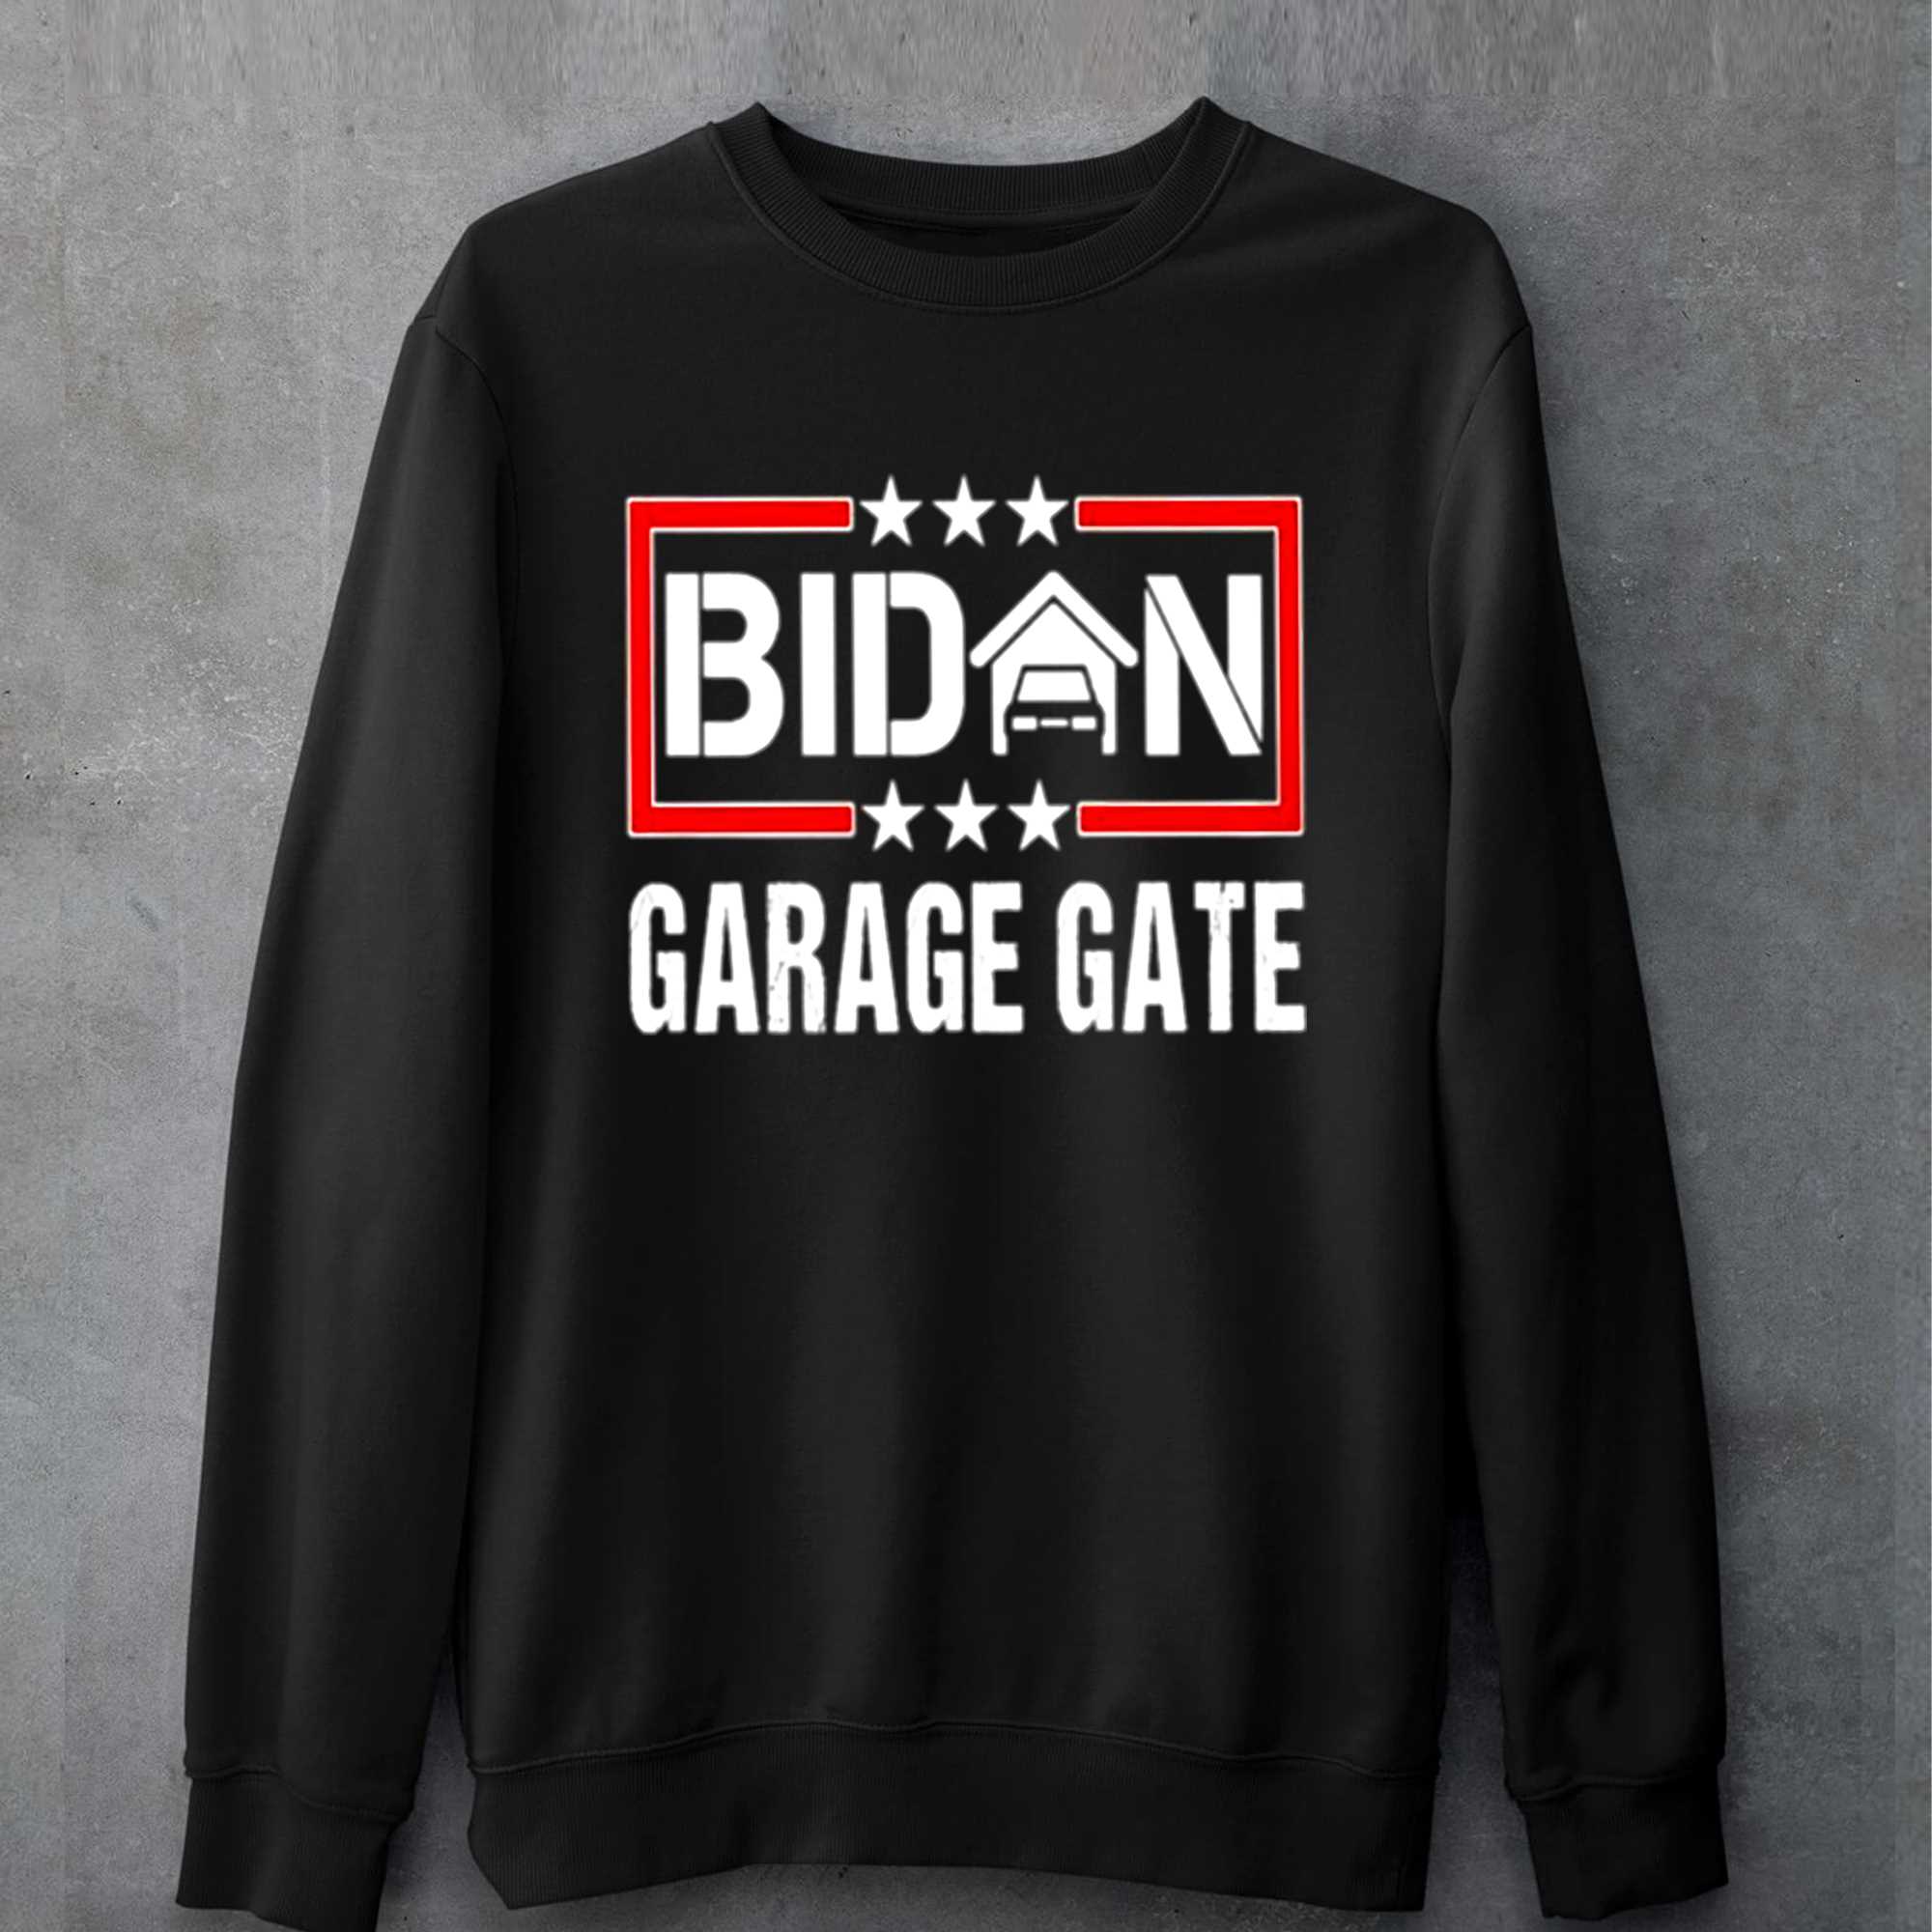 Biden Garage Gate Shirt 